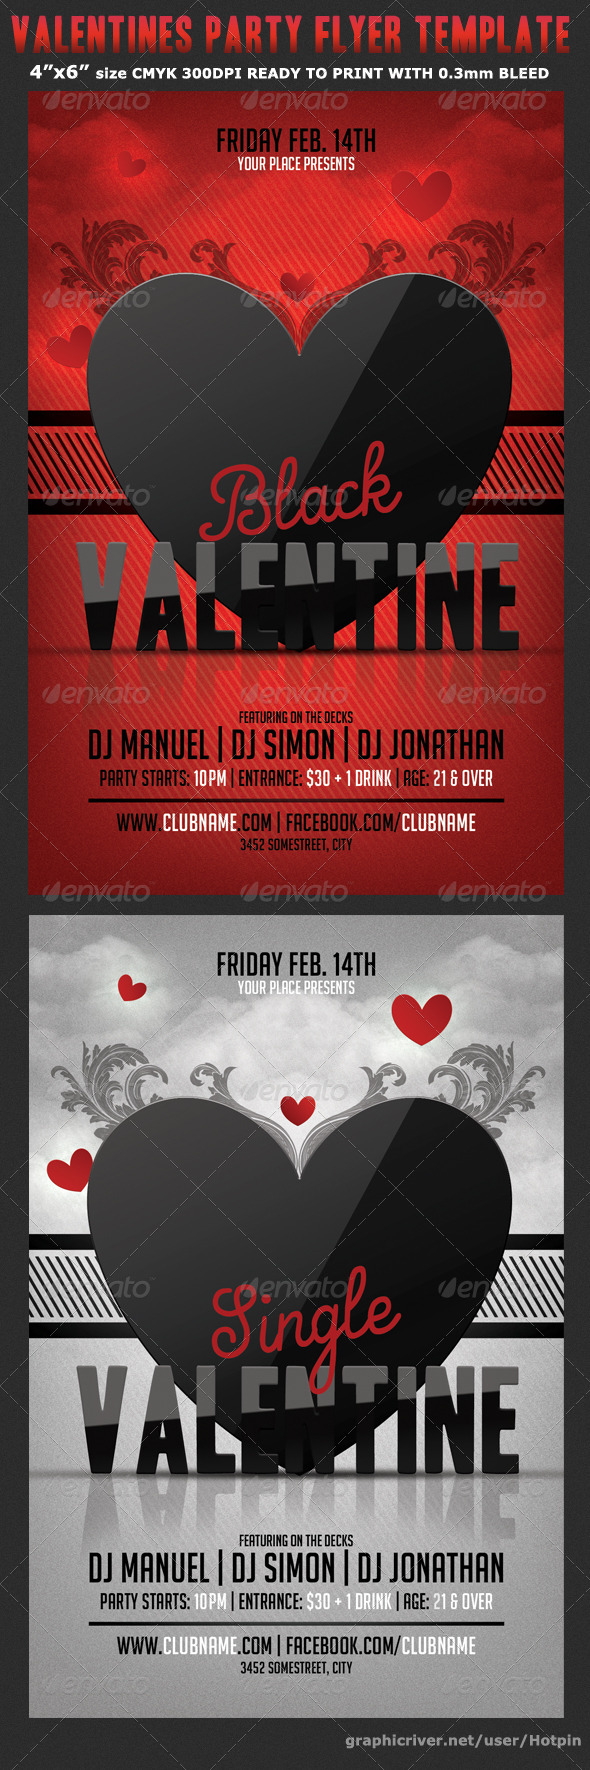 Black Valentine Party Flyer Template